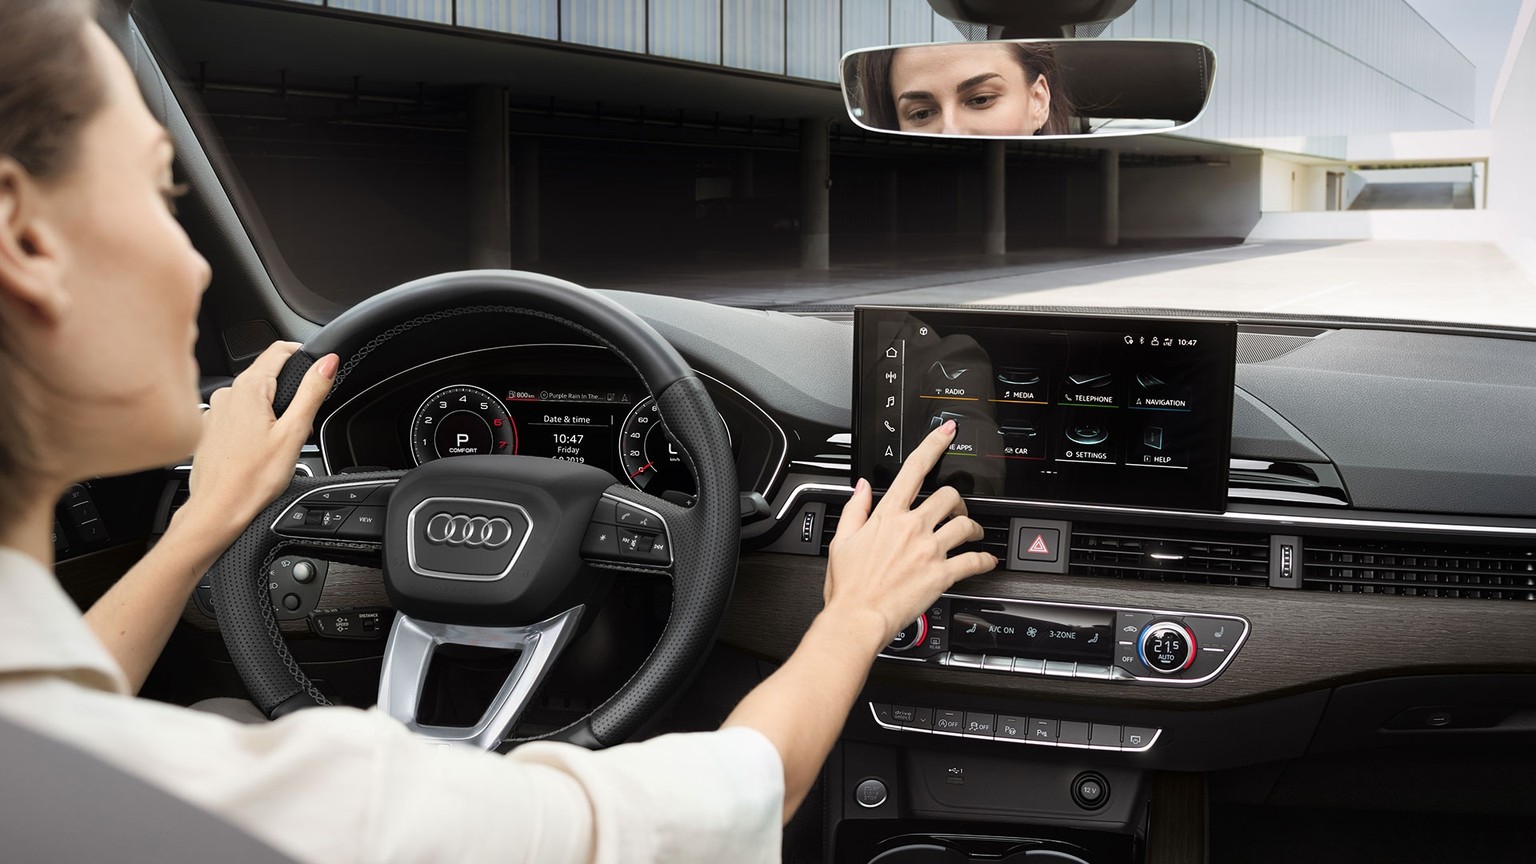 Audi A5 Cabriolet MMI touch display - Audi Australia